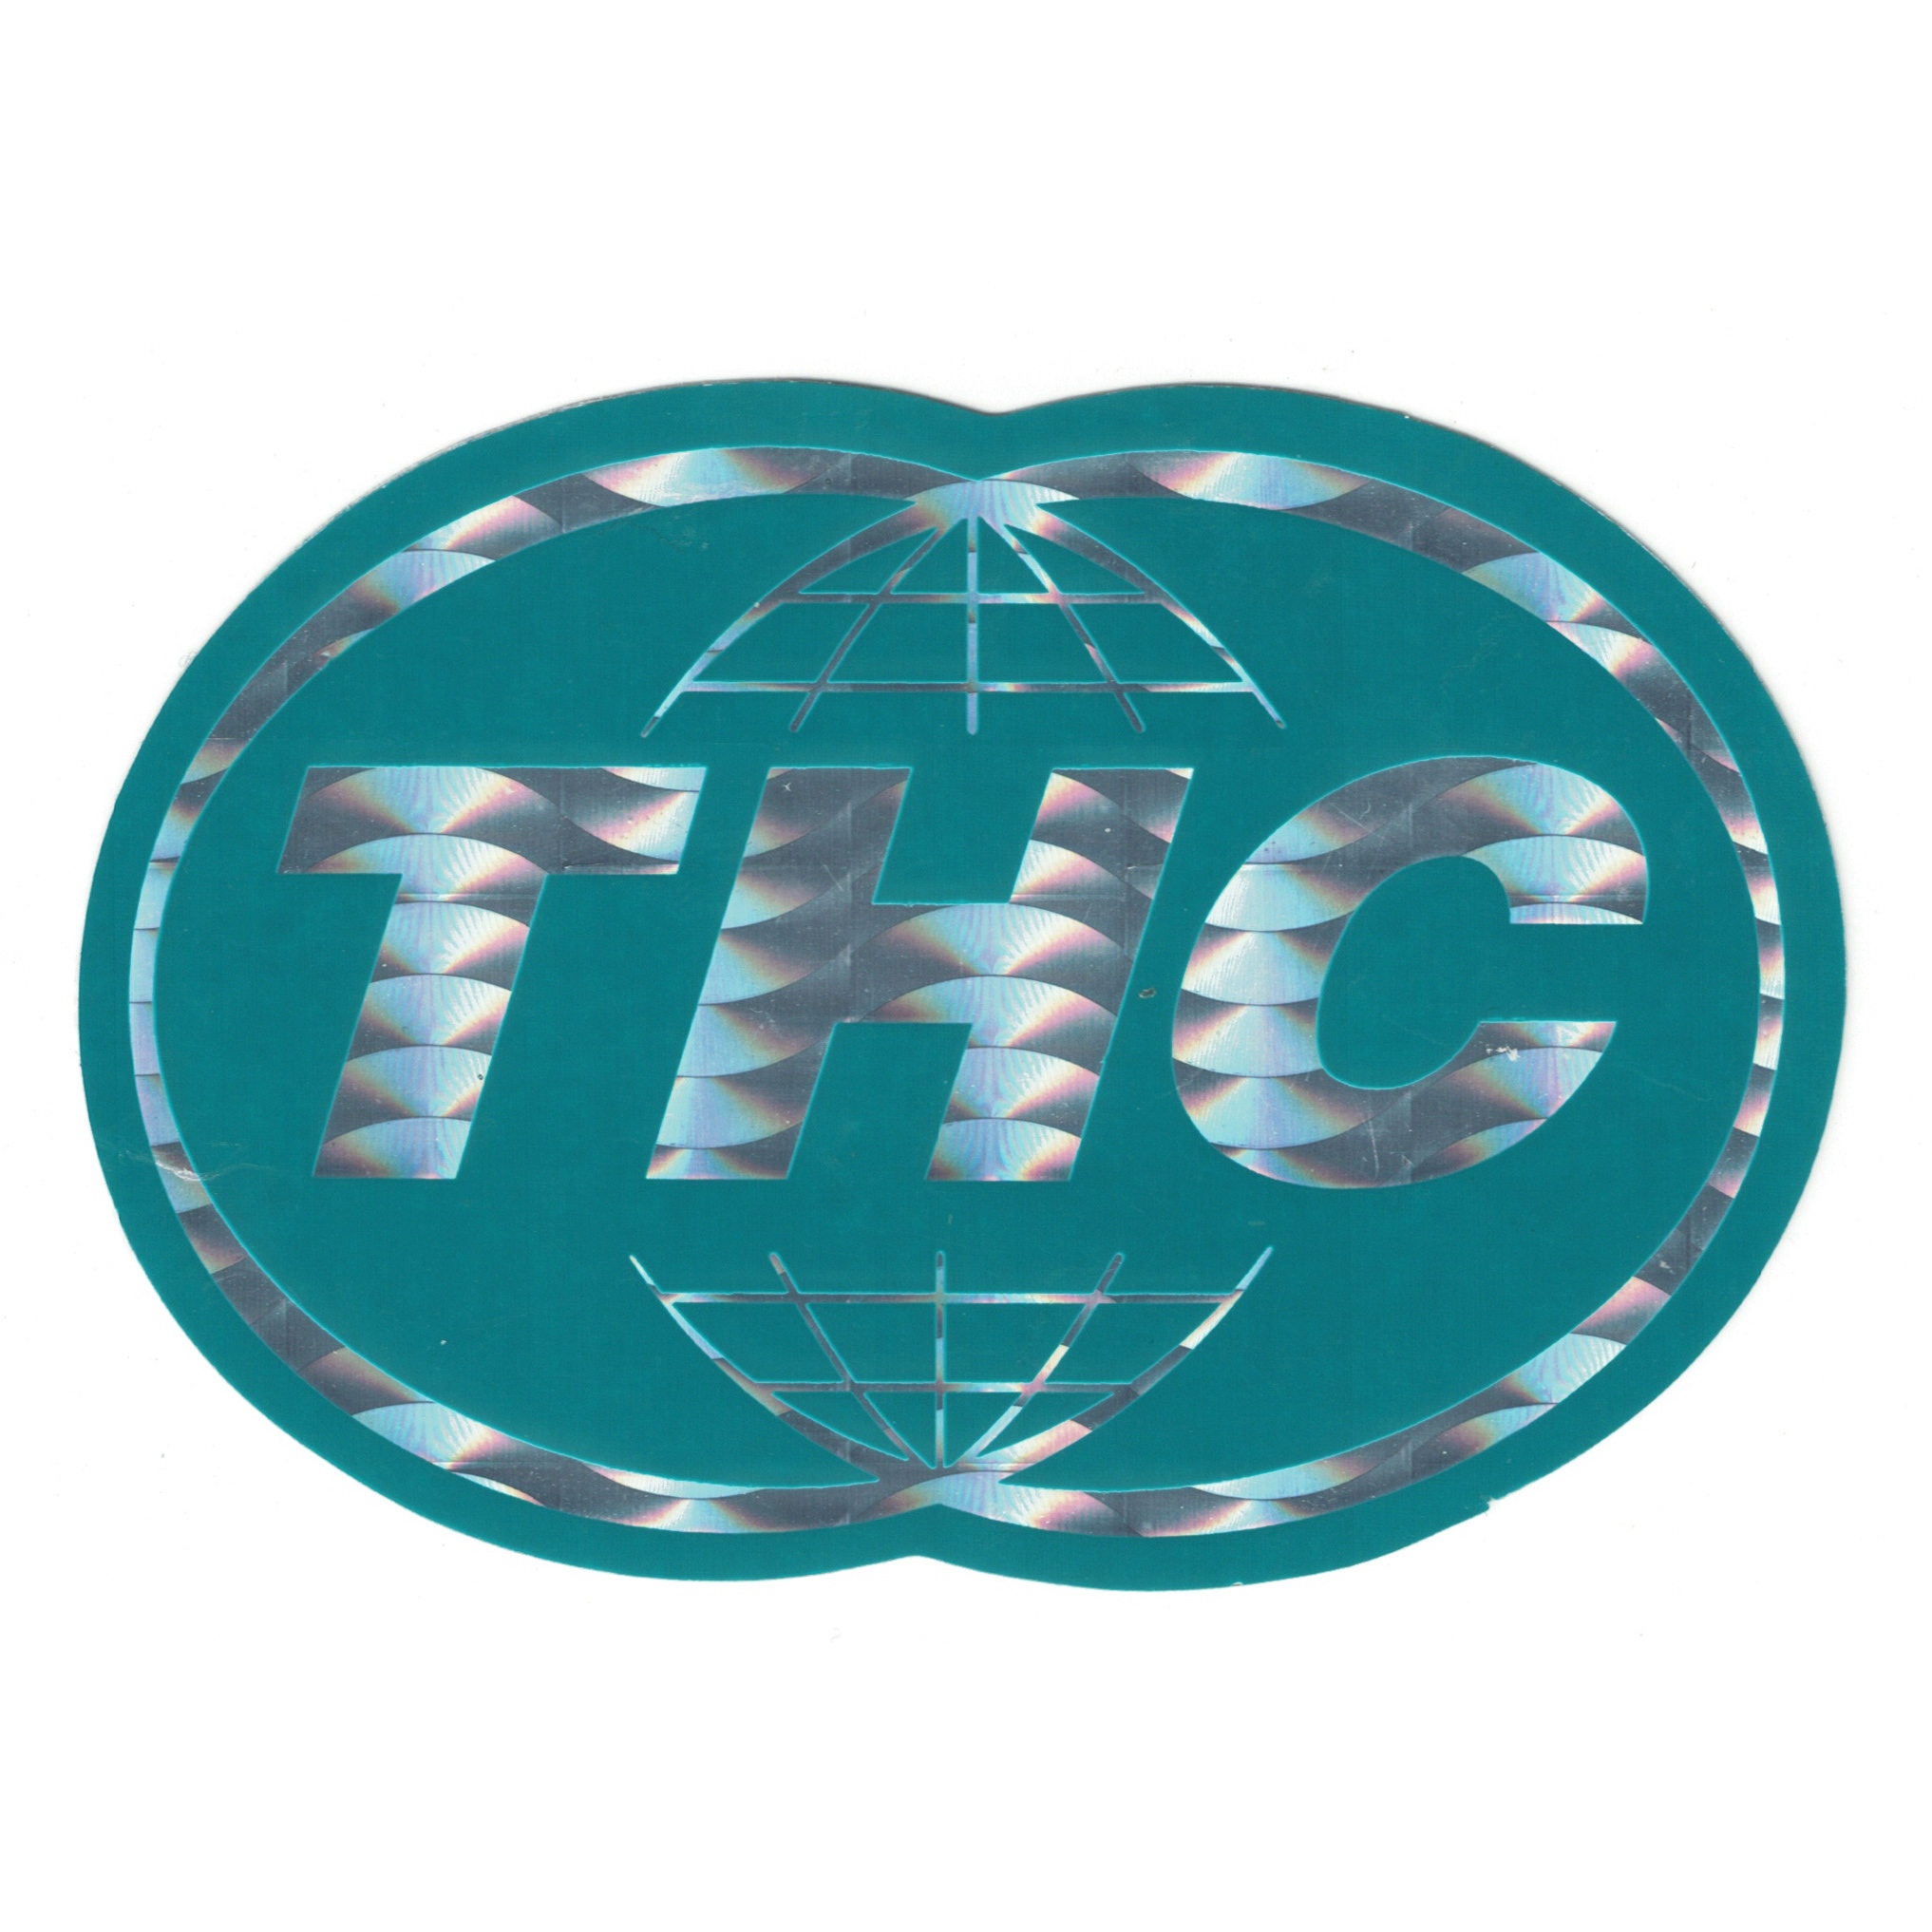 THC TWA Teal Reflective